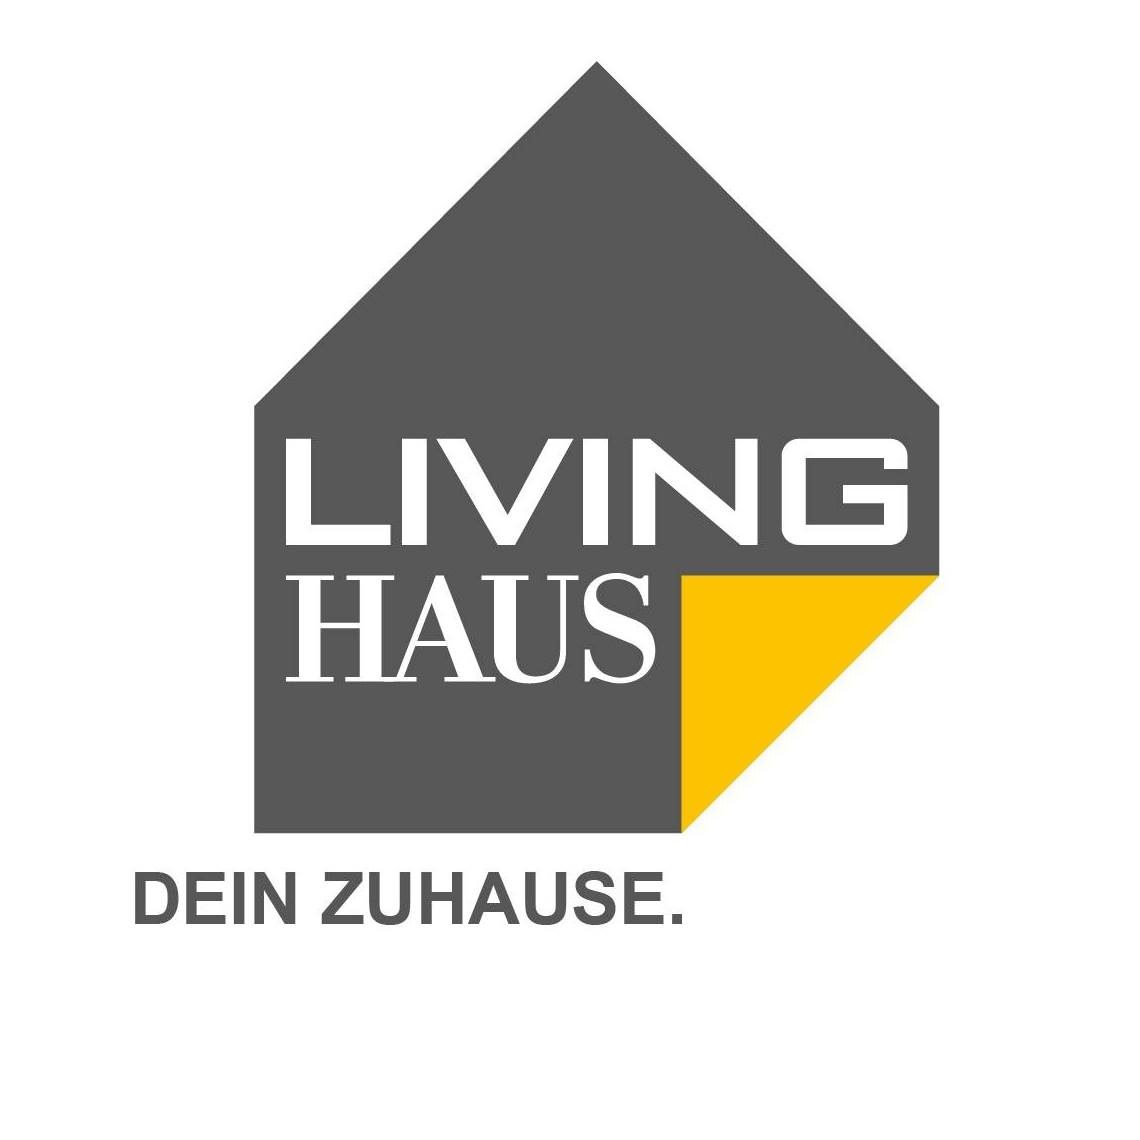 Living Fertighaus GmbH - Handelsvertretung Torsten Rohde